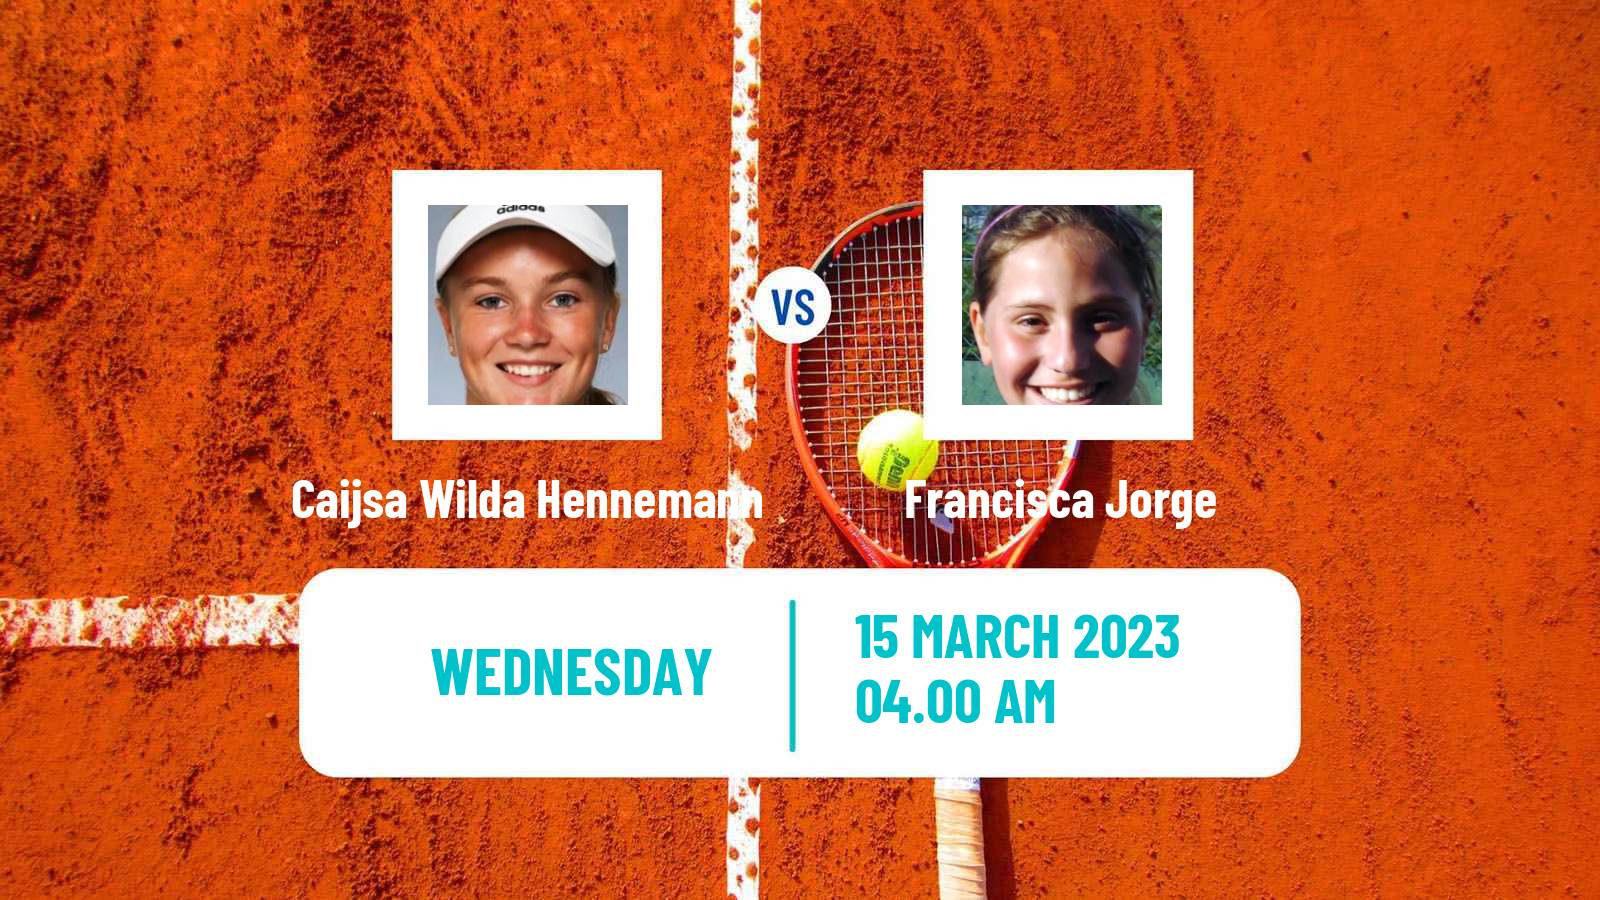 Tennis ITF Tournaments Caijsa Wilda Hennemann - Francisca Jorge